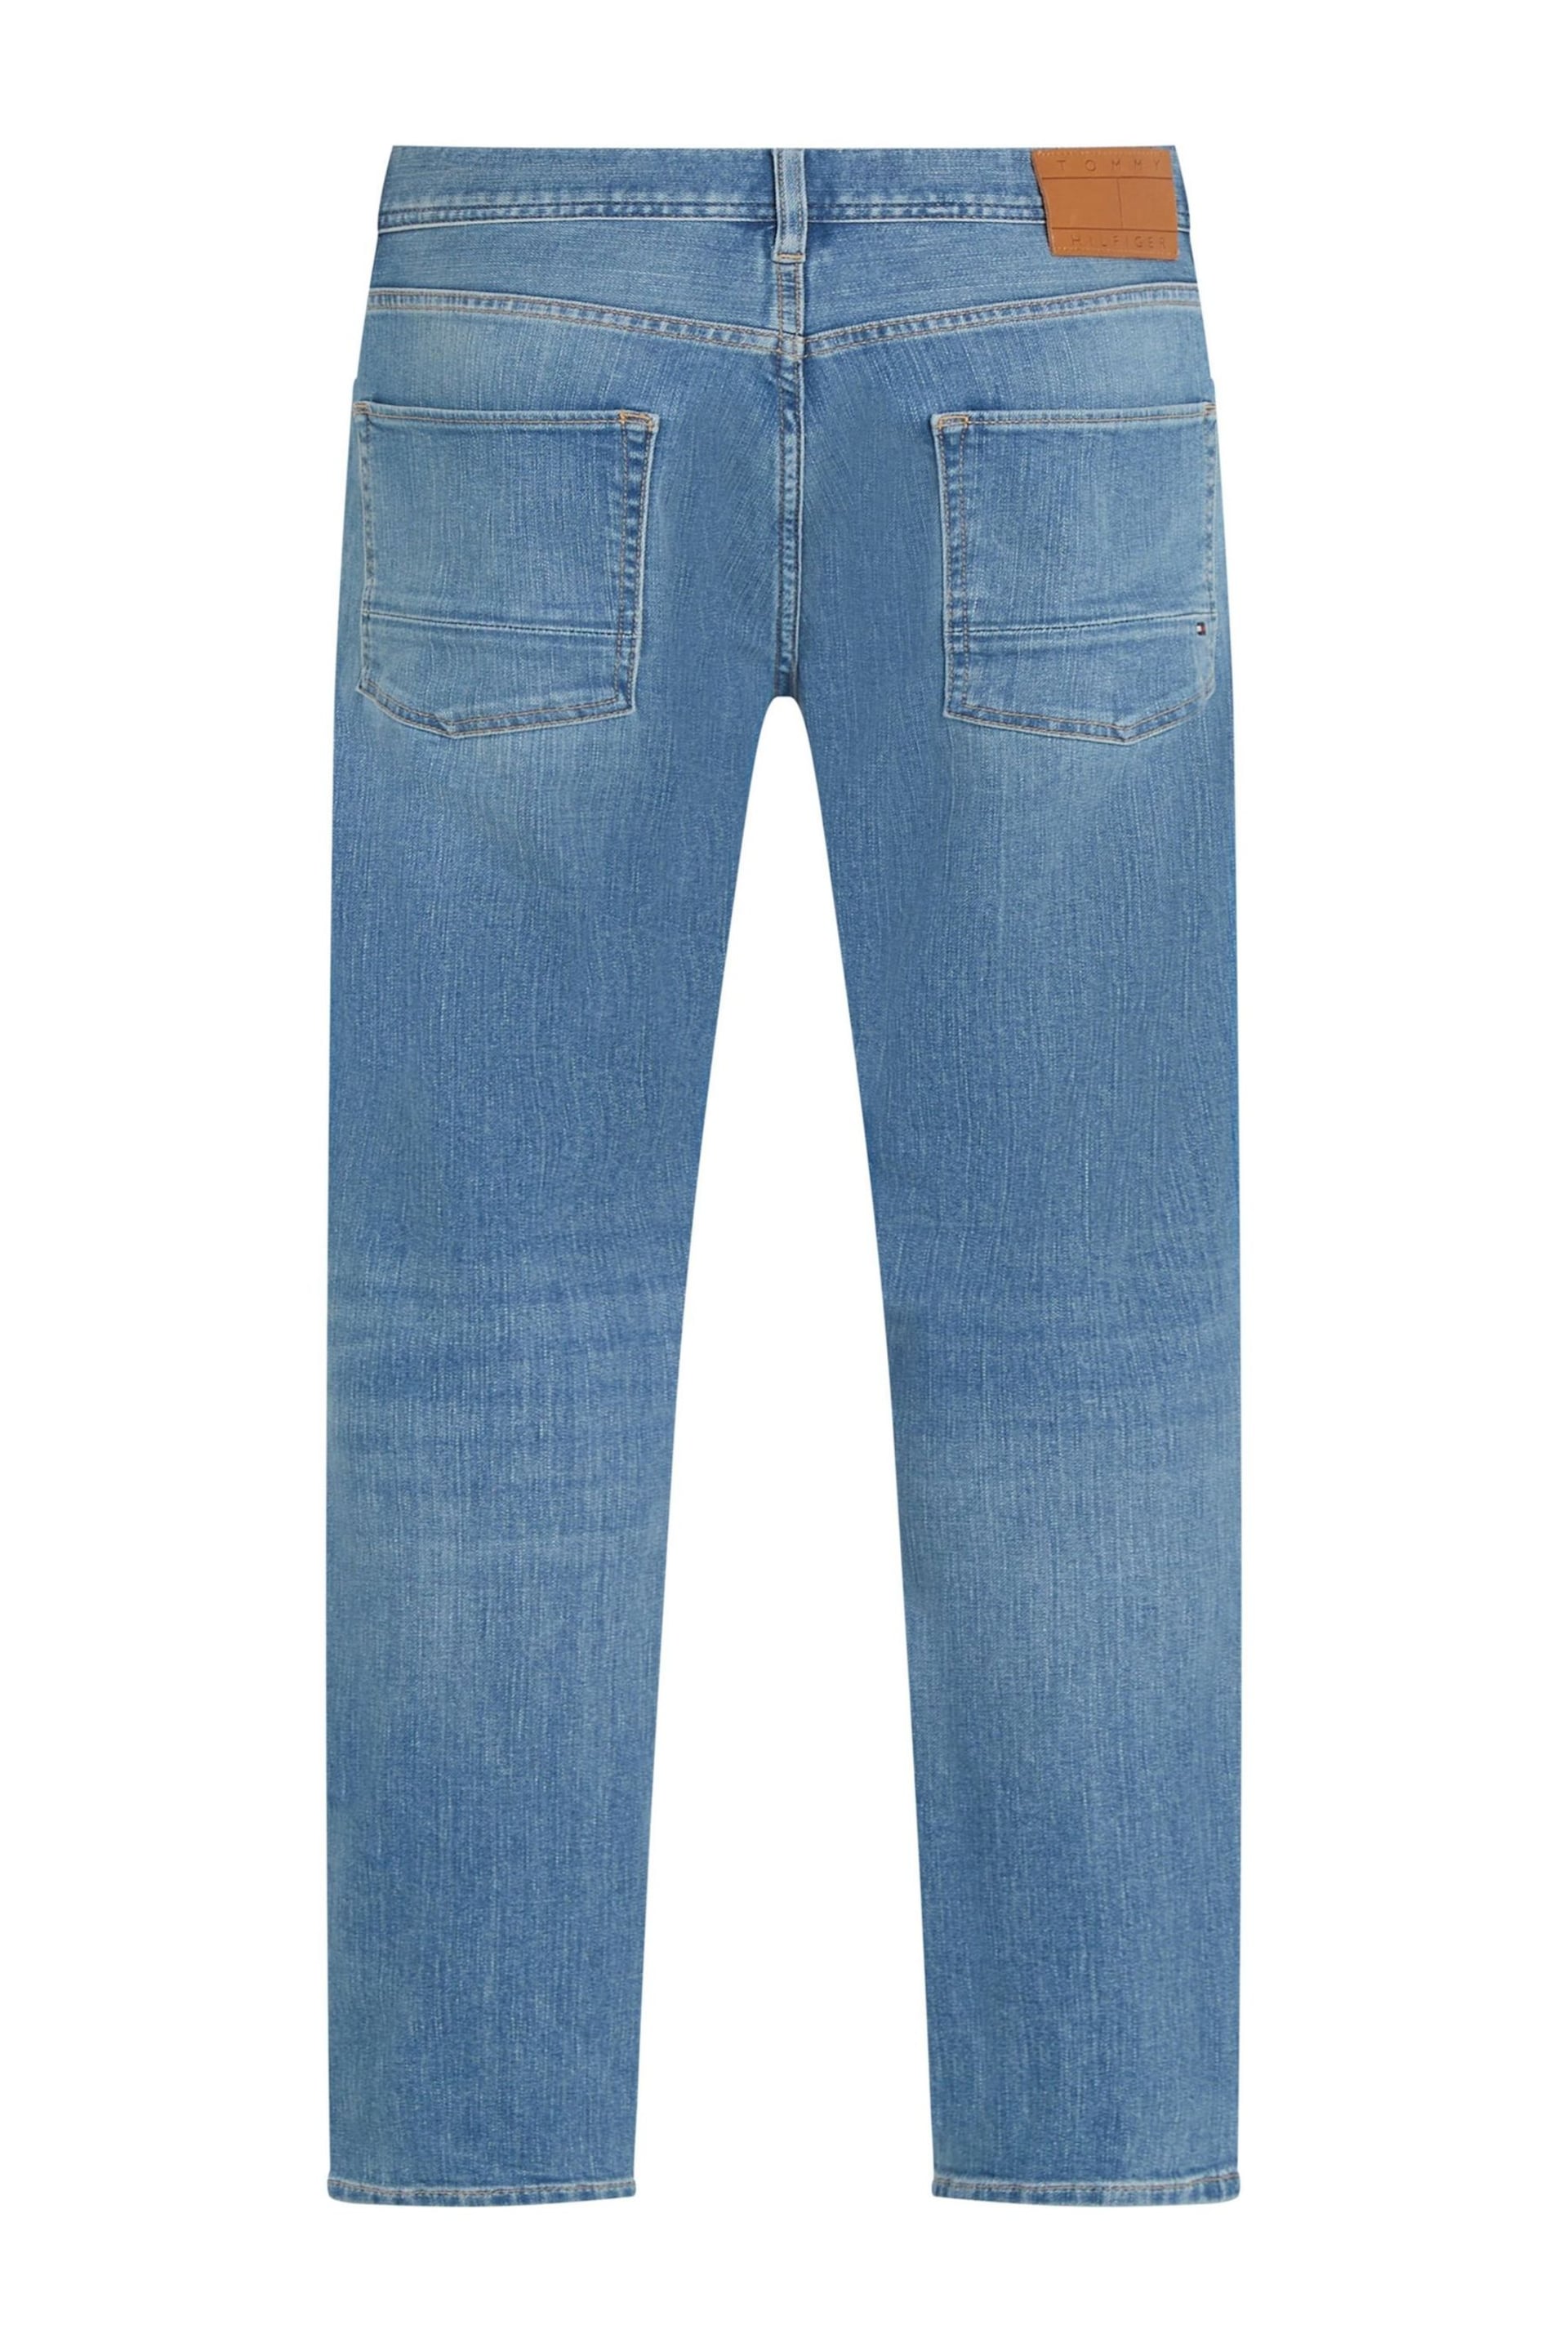 Tommy Hilfiger Blue Madison Jeans - Image 3 of 4